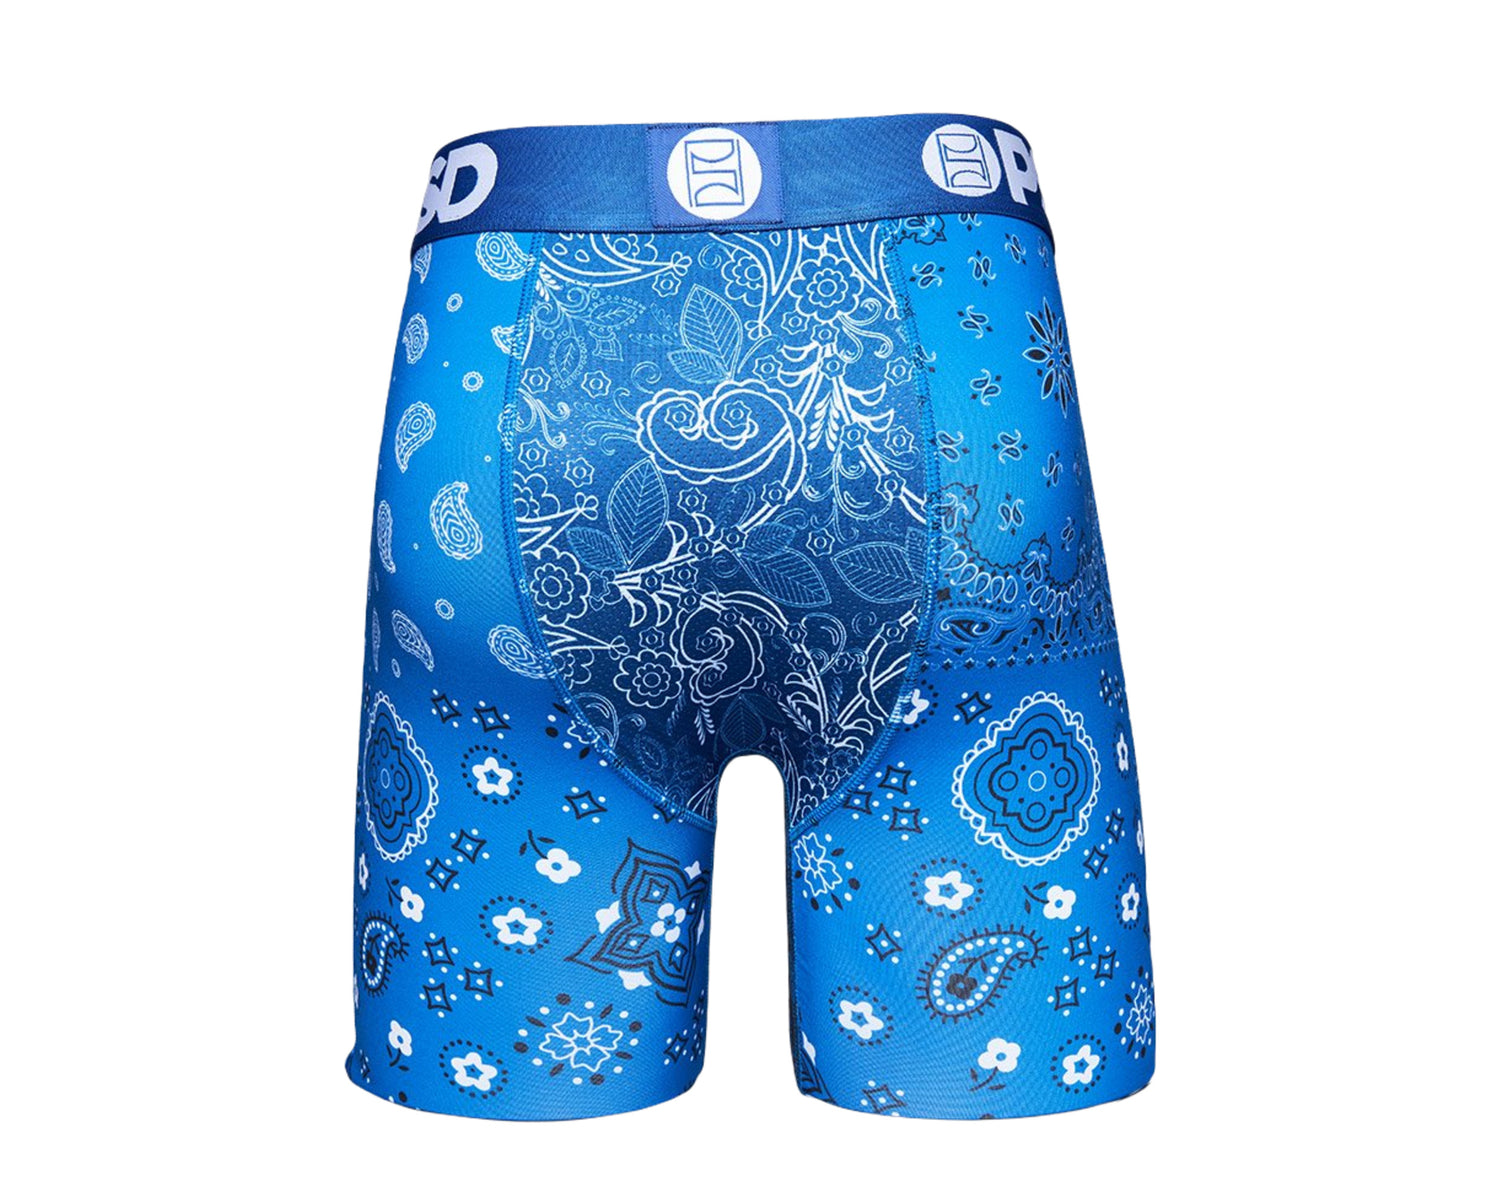 PSD Hyper Blue Bandana Boxer Briefs Men's Underwear